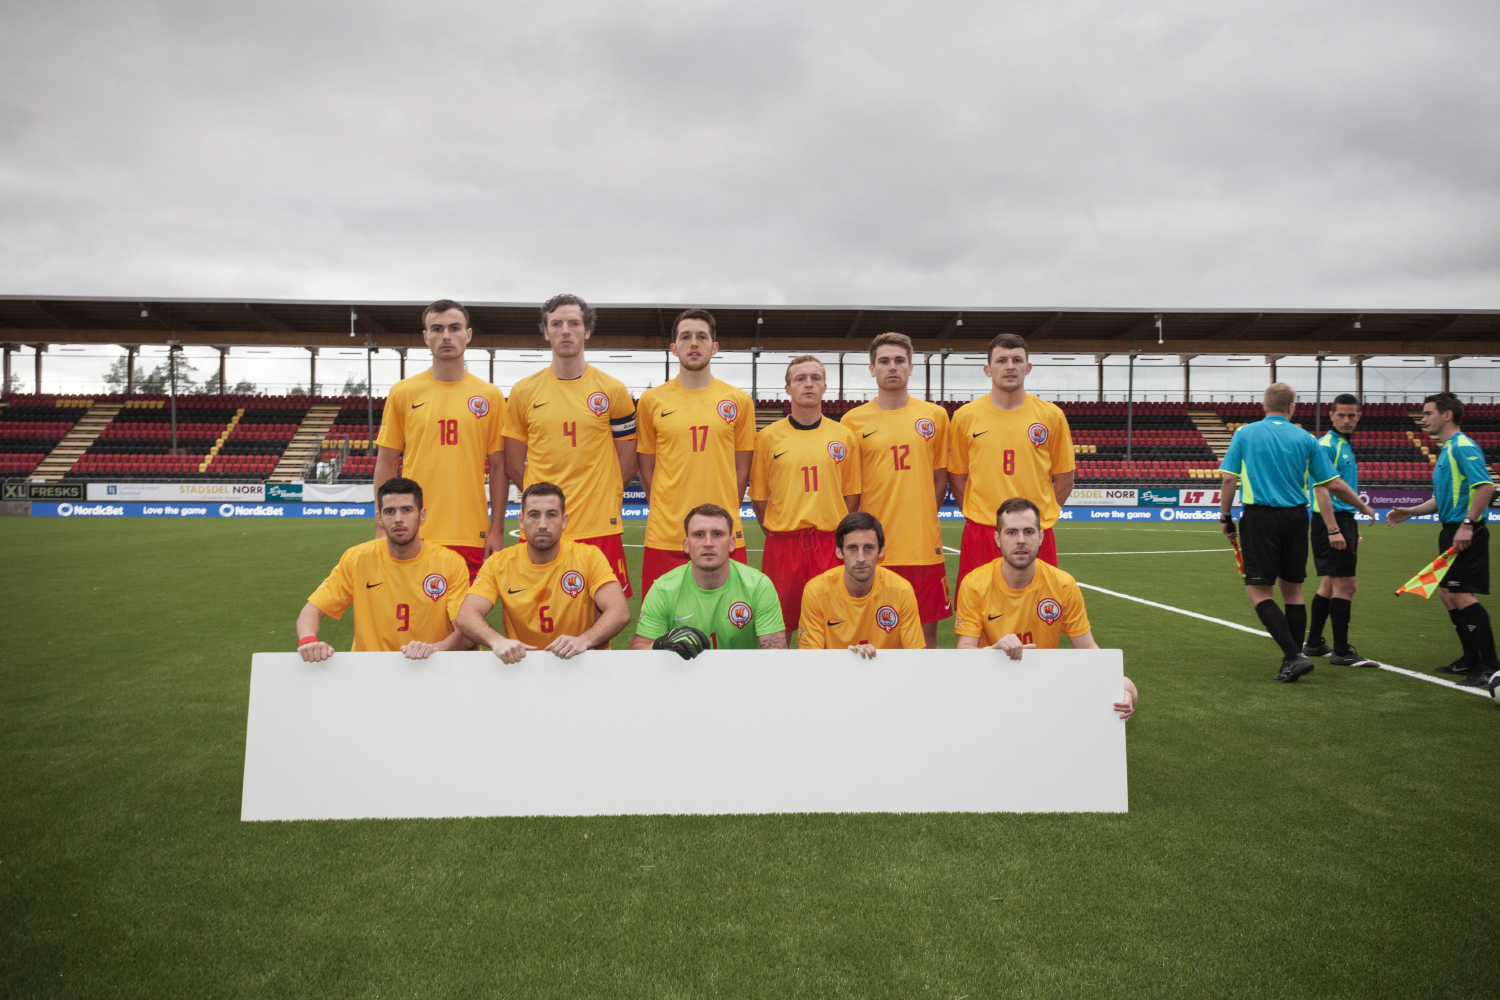  Sweden, Ostersund, June 2014.
Ellan Vannin's team group picture before a match.  